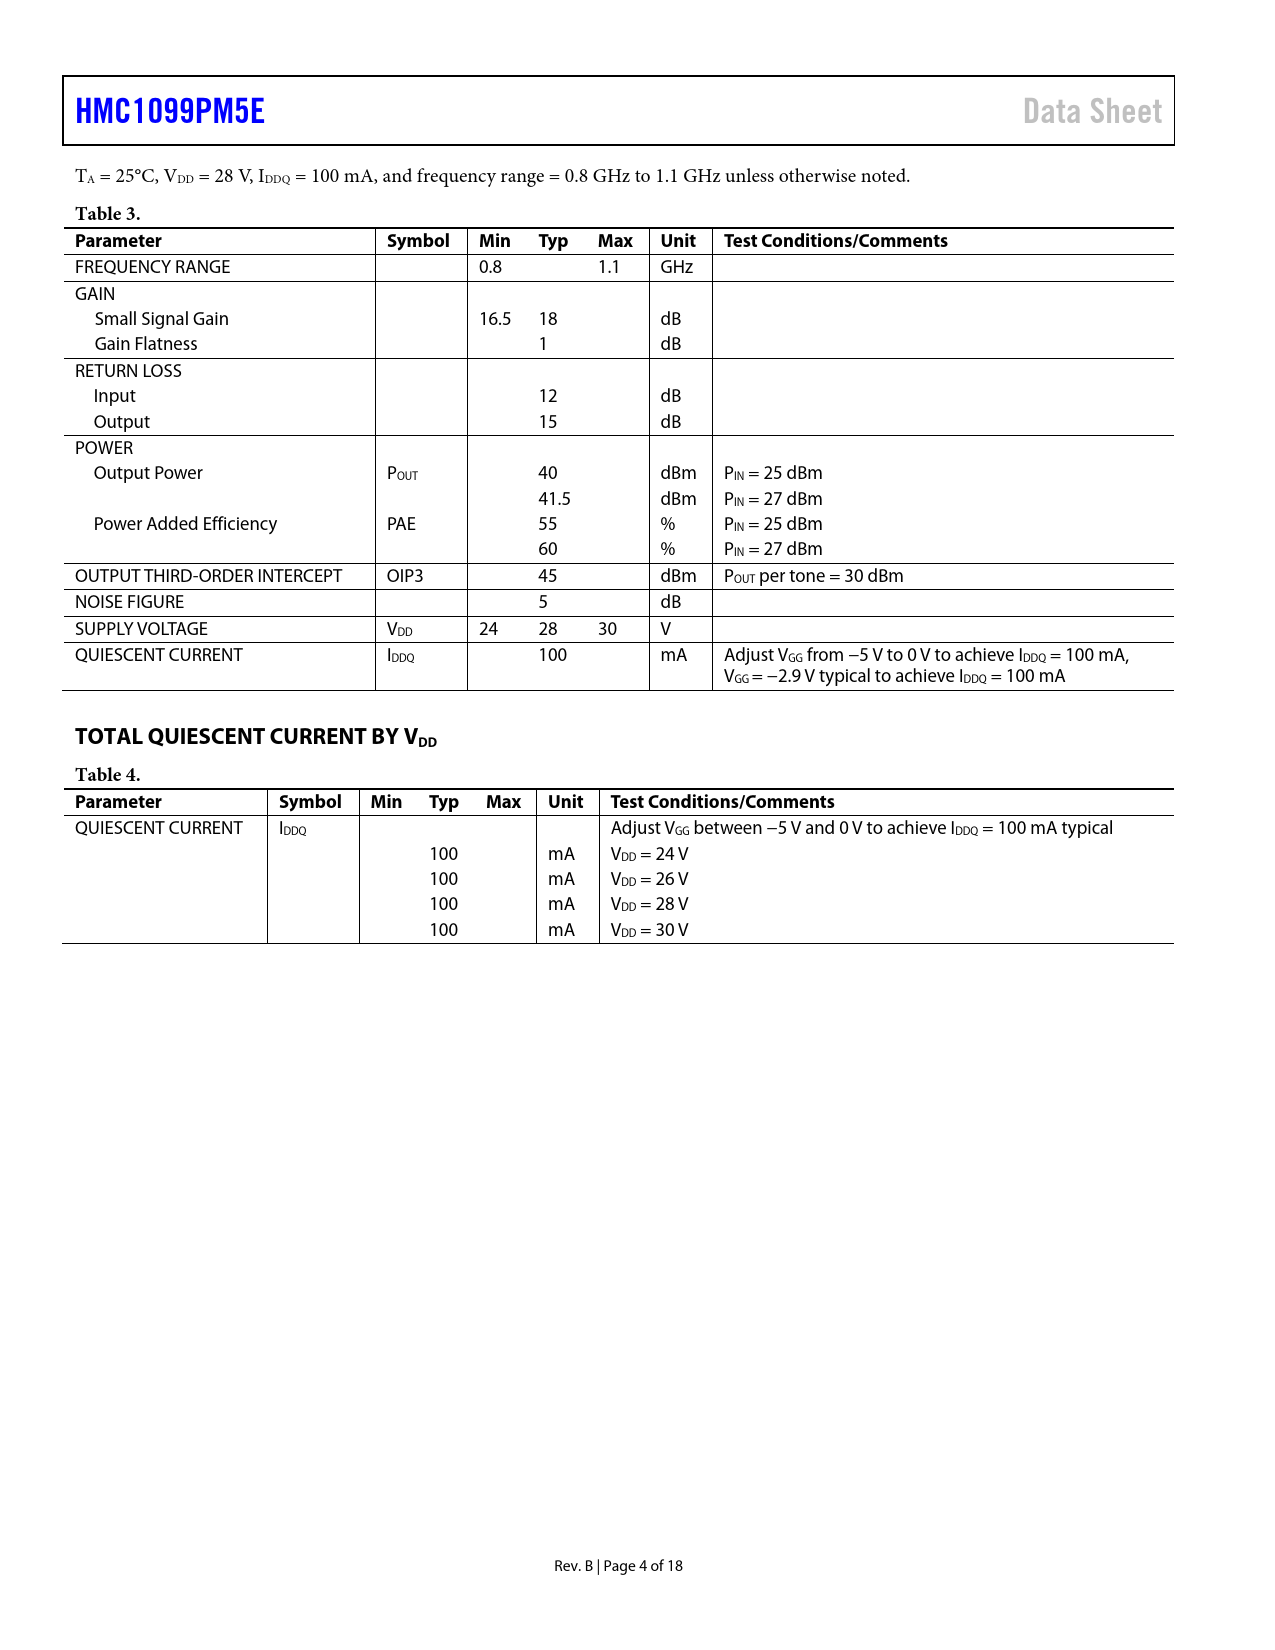 HMC1099PM5E Data Sheet Table 3 Parameter Symbol Min Typ Max Unit Test Conditions/Comments